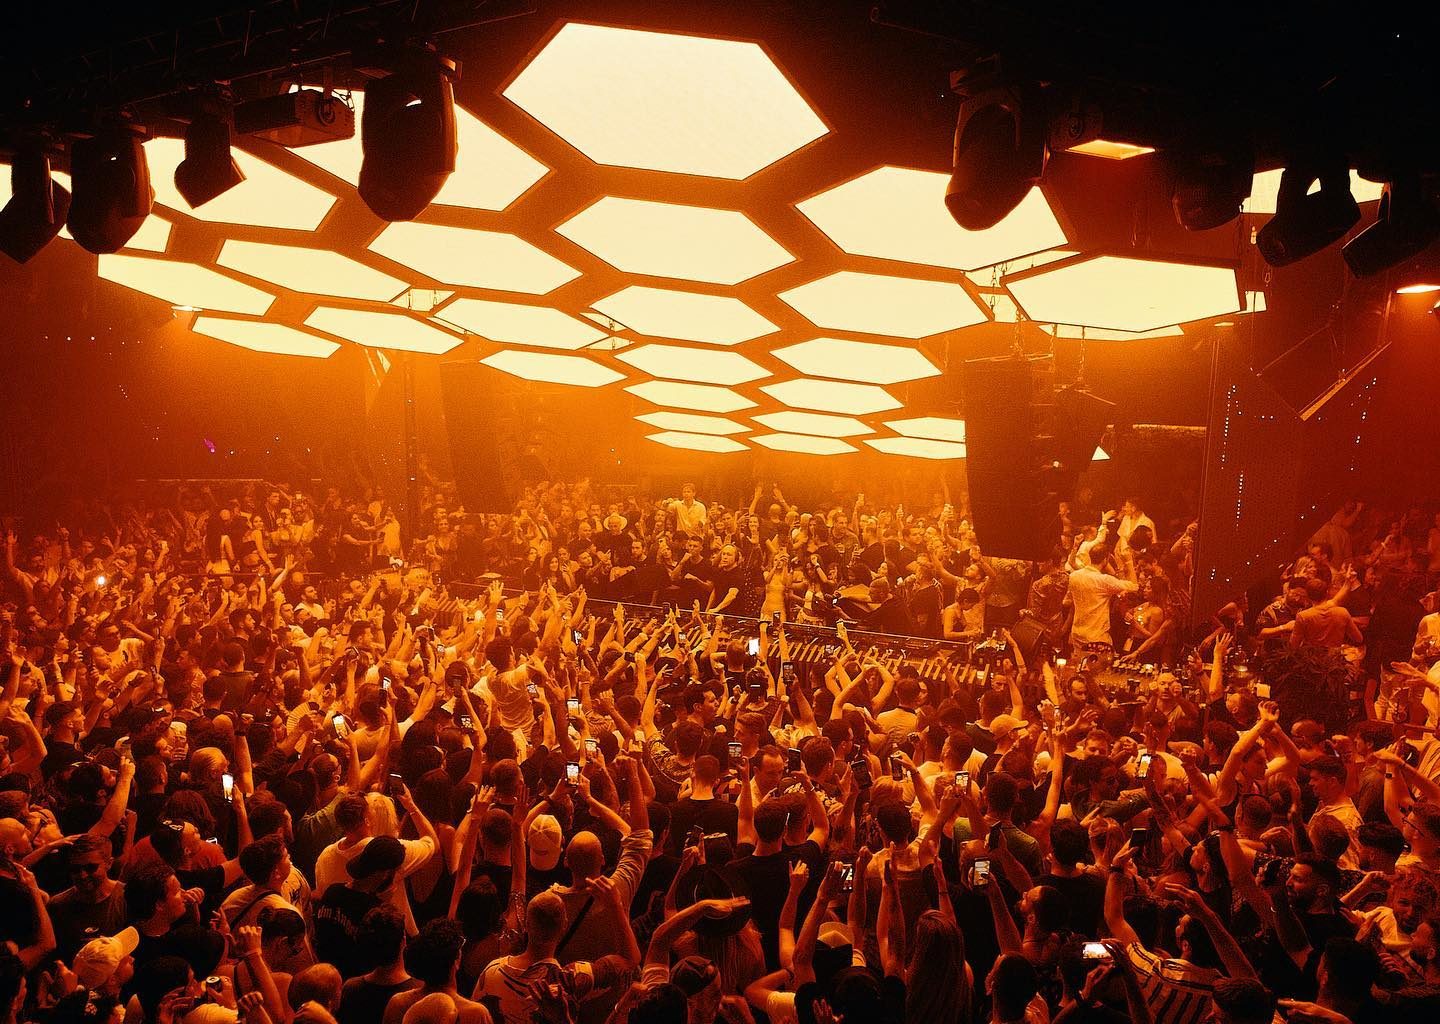 Hexagonal orange lights and crowd dancing at the nightclub Pacha in Ibiza, Spain